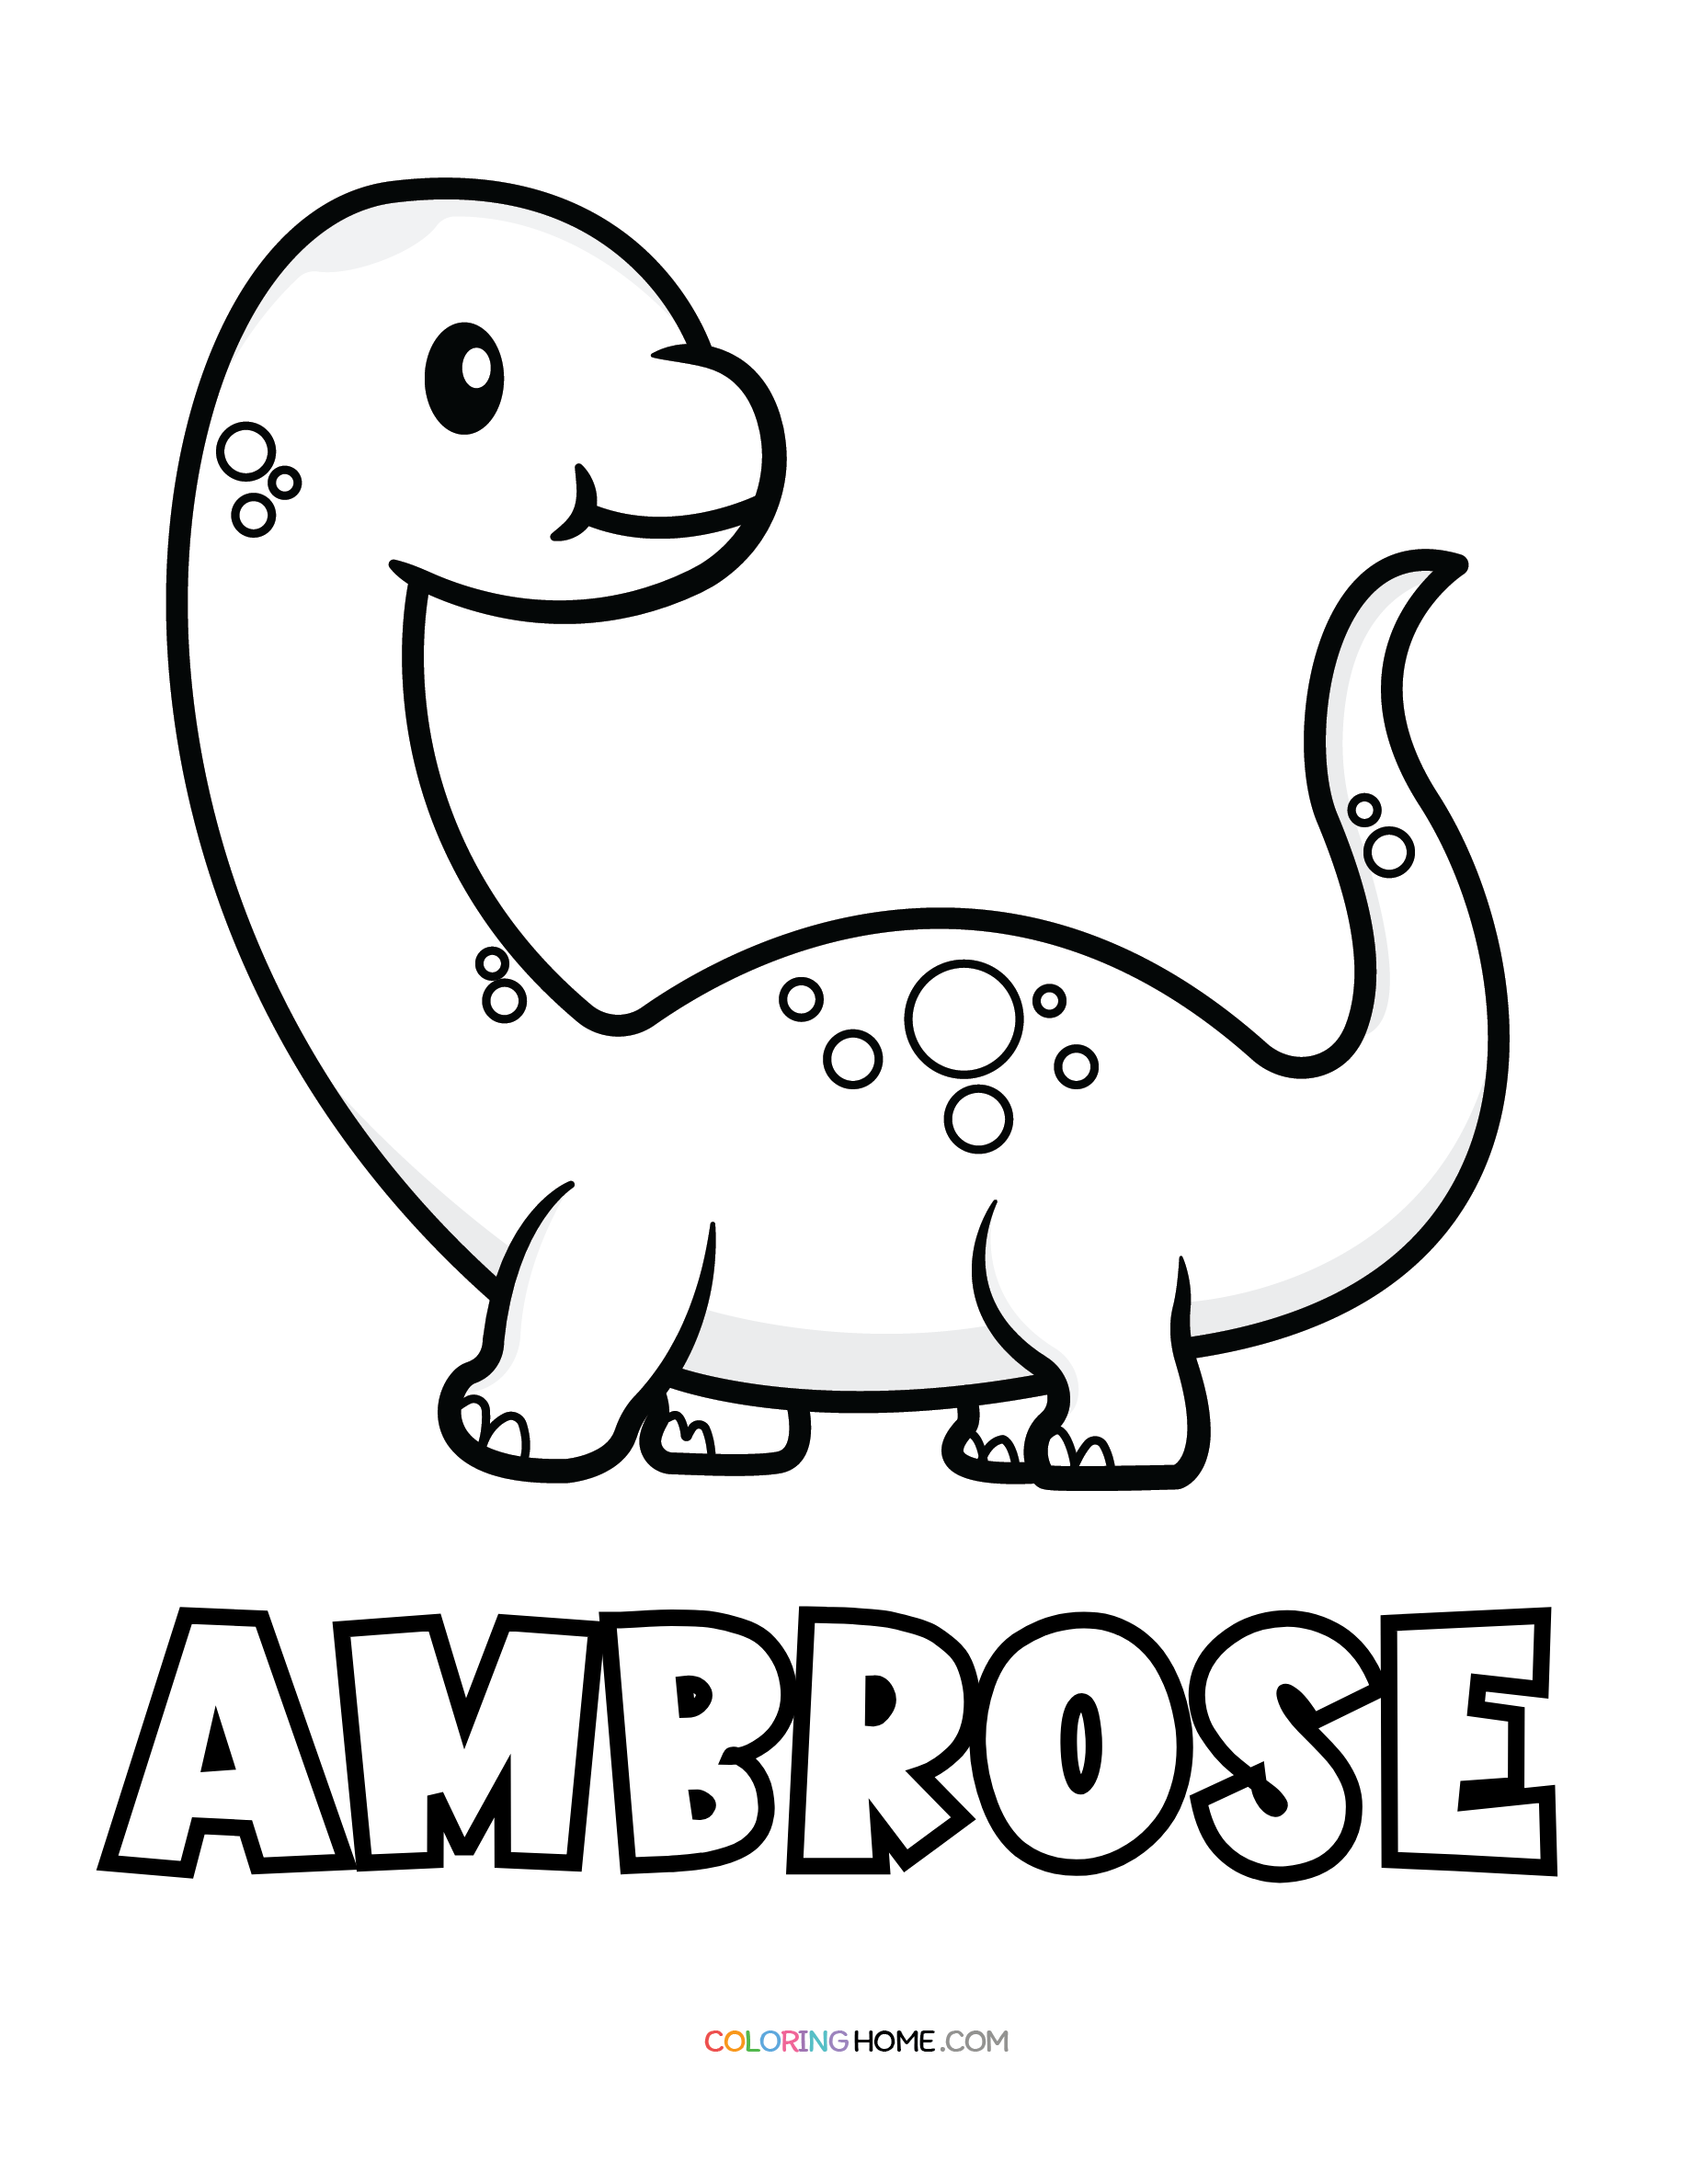 Ambrose dinosaur coloring page